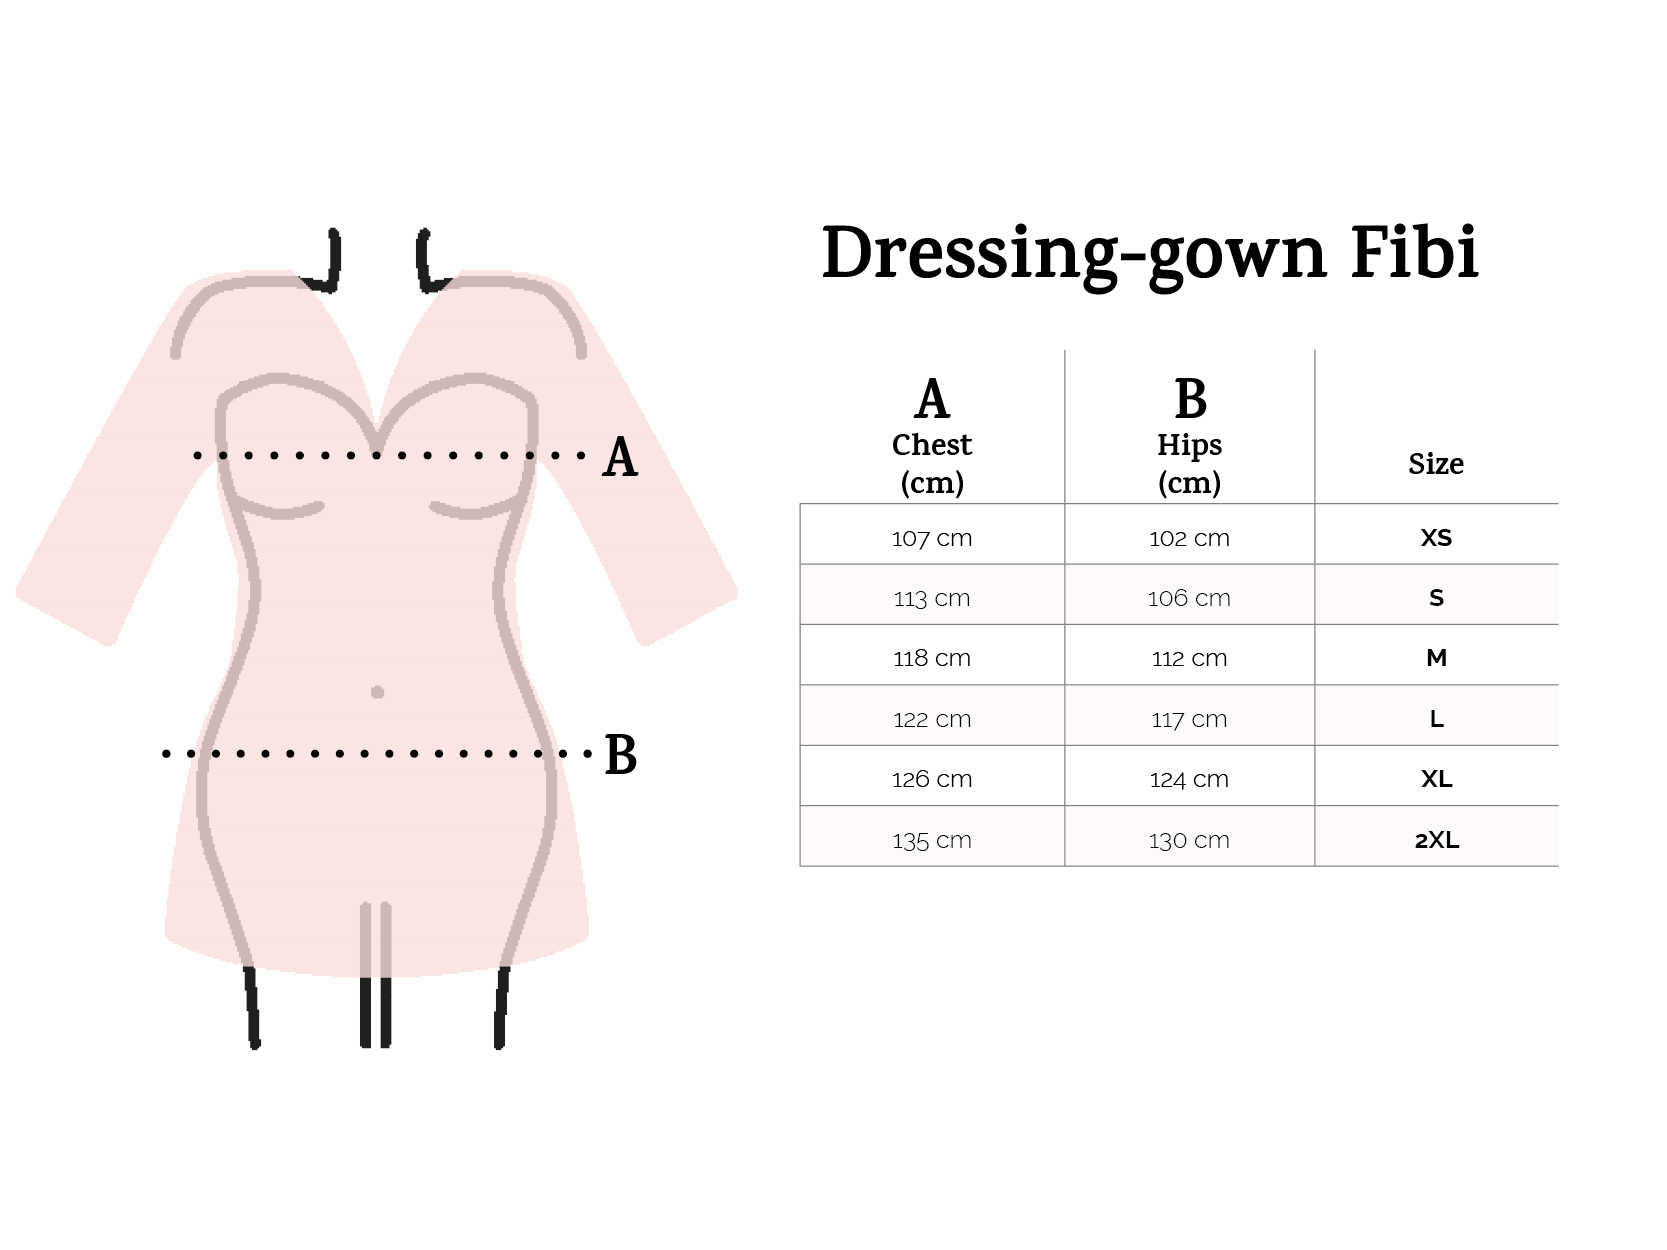 Dressing-gown Fibi